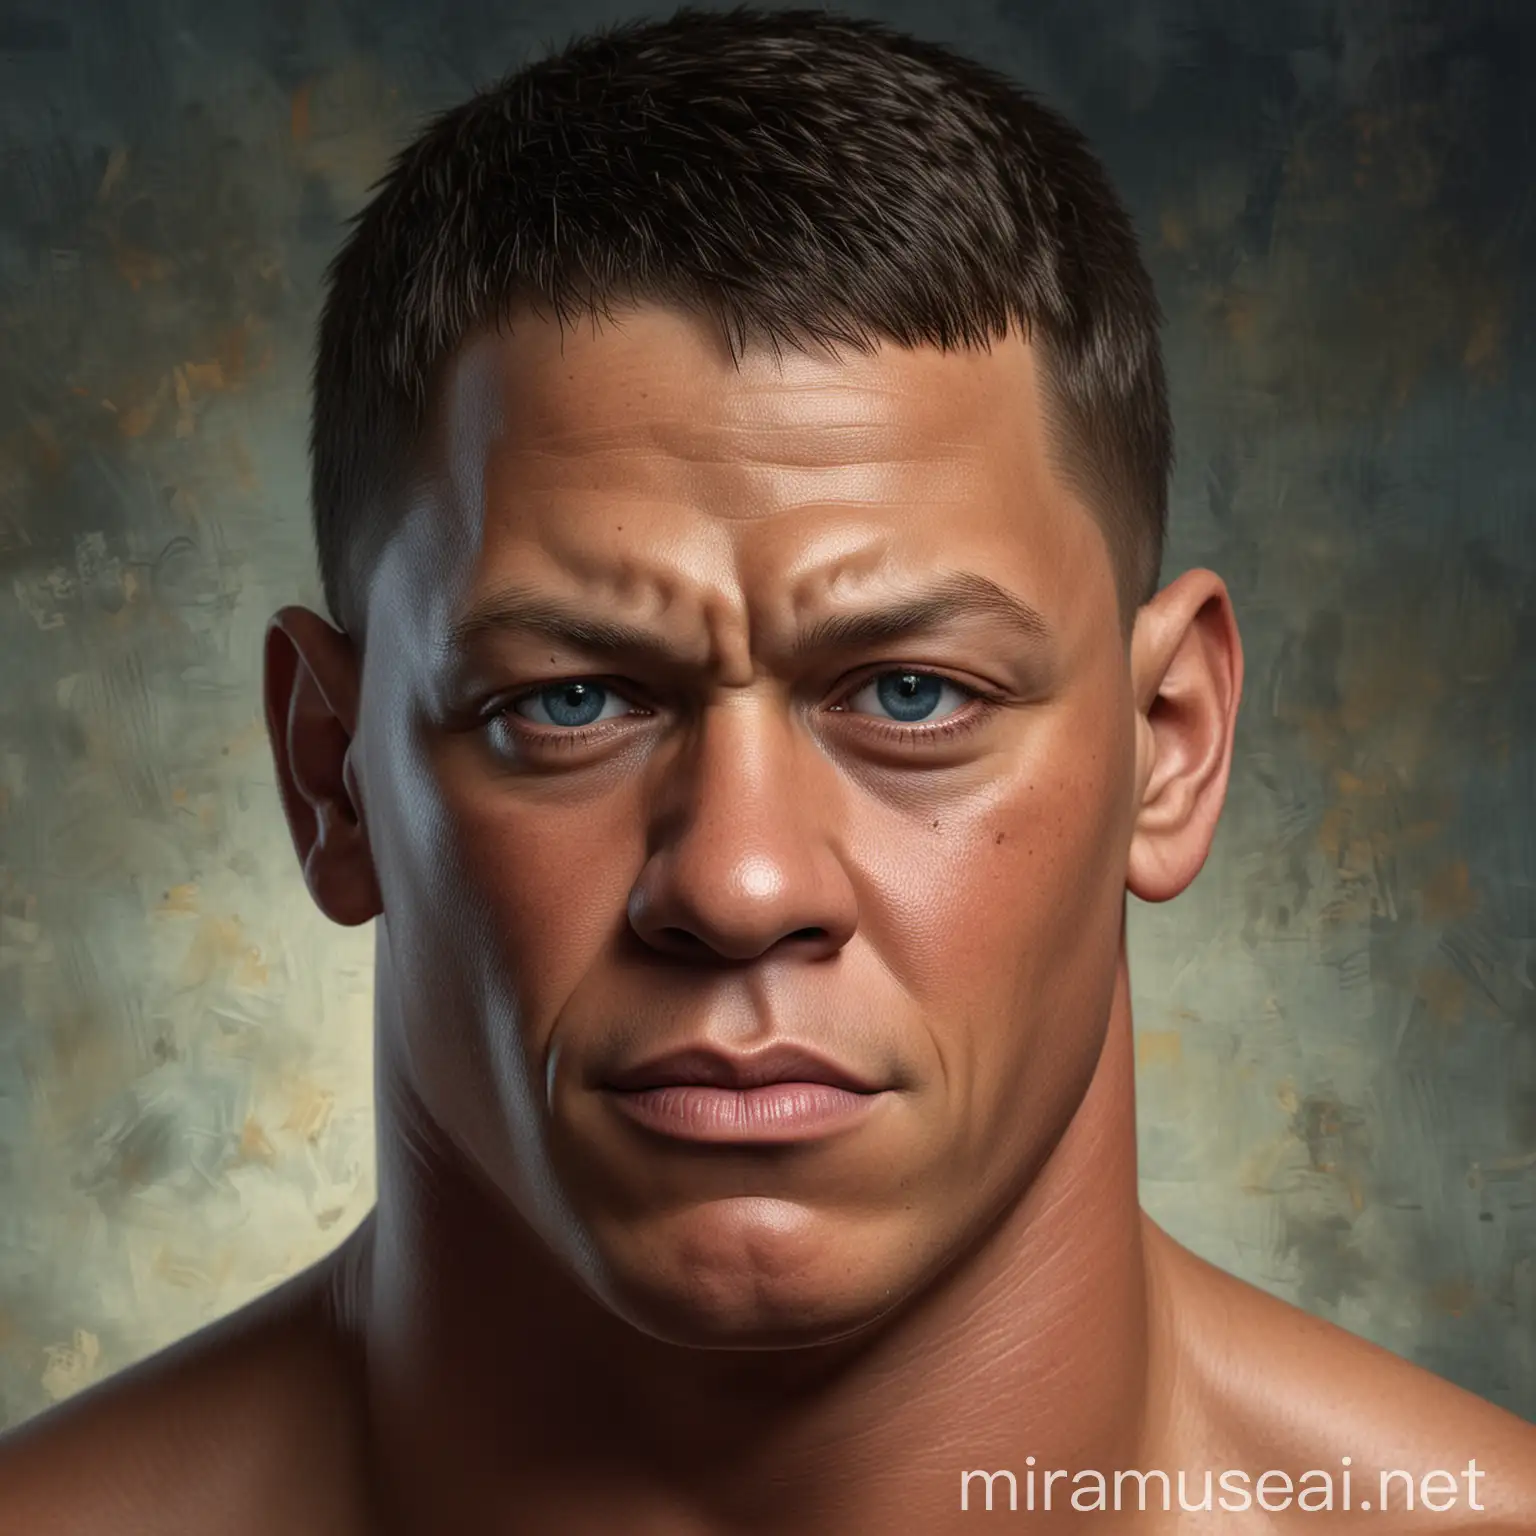 Black Portrait of John Cena Wrestling Superstar in a Bold New Look